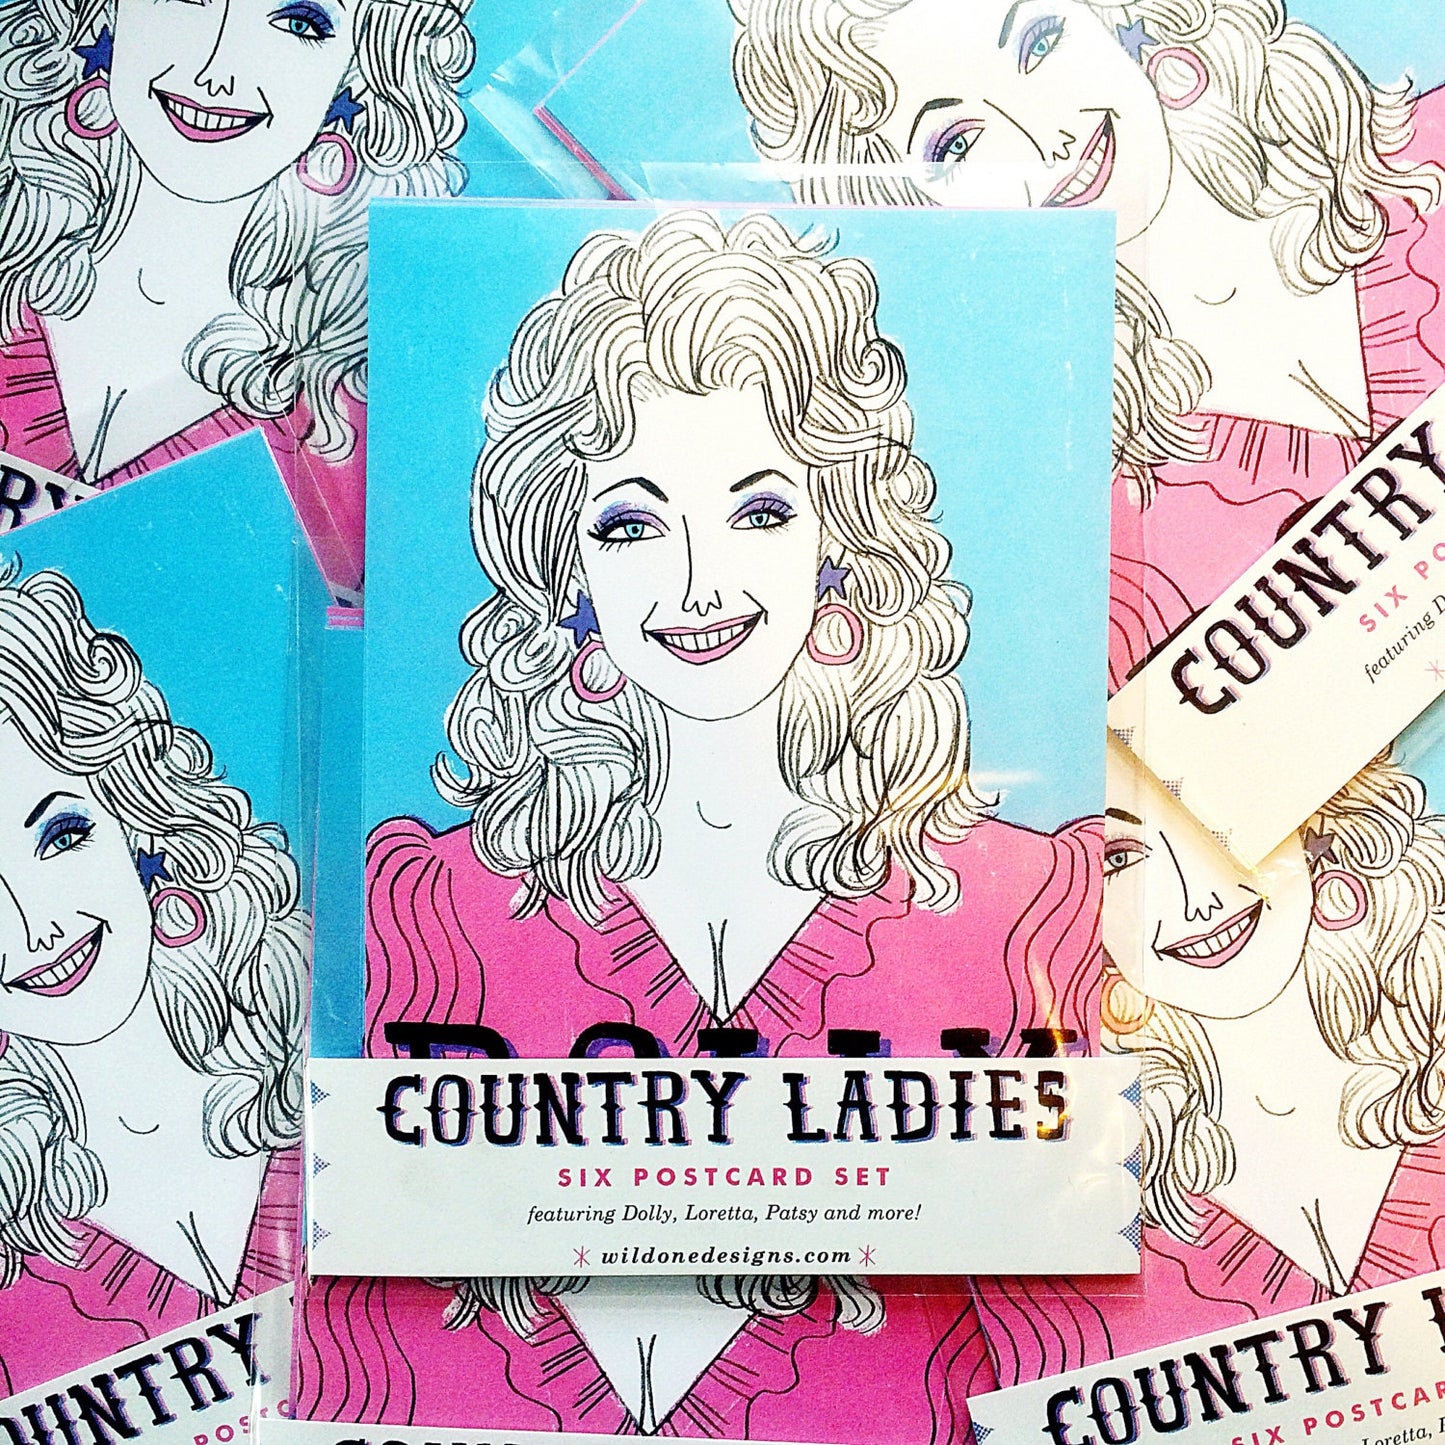 Country Ladies Six 5x7 Postcard Set